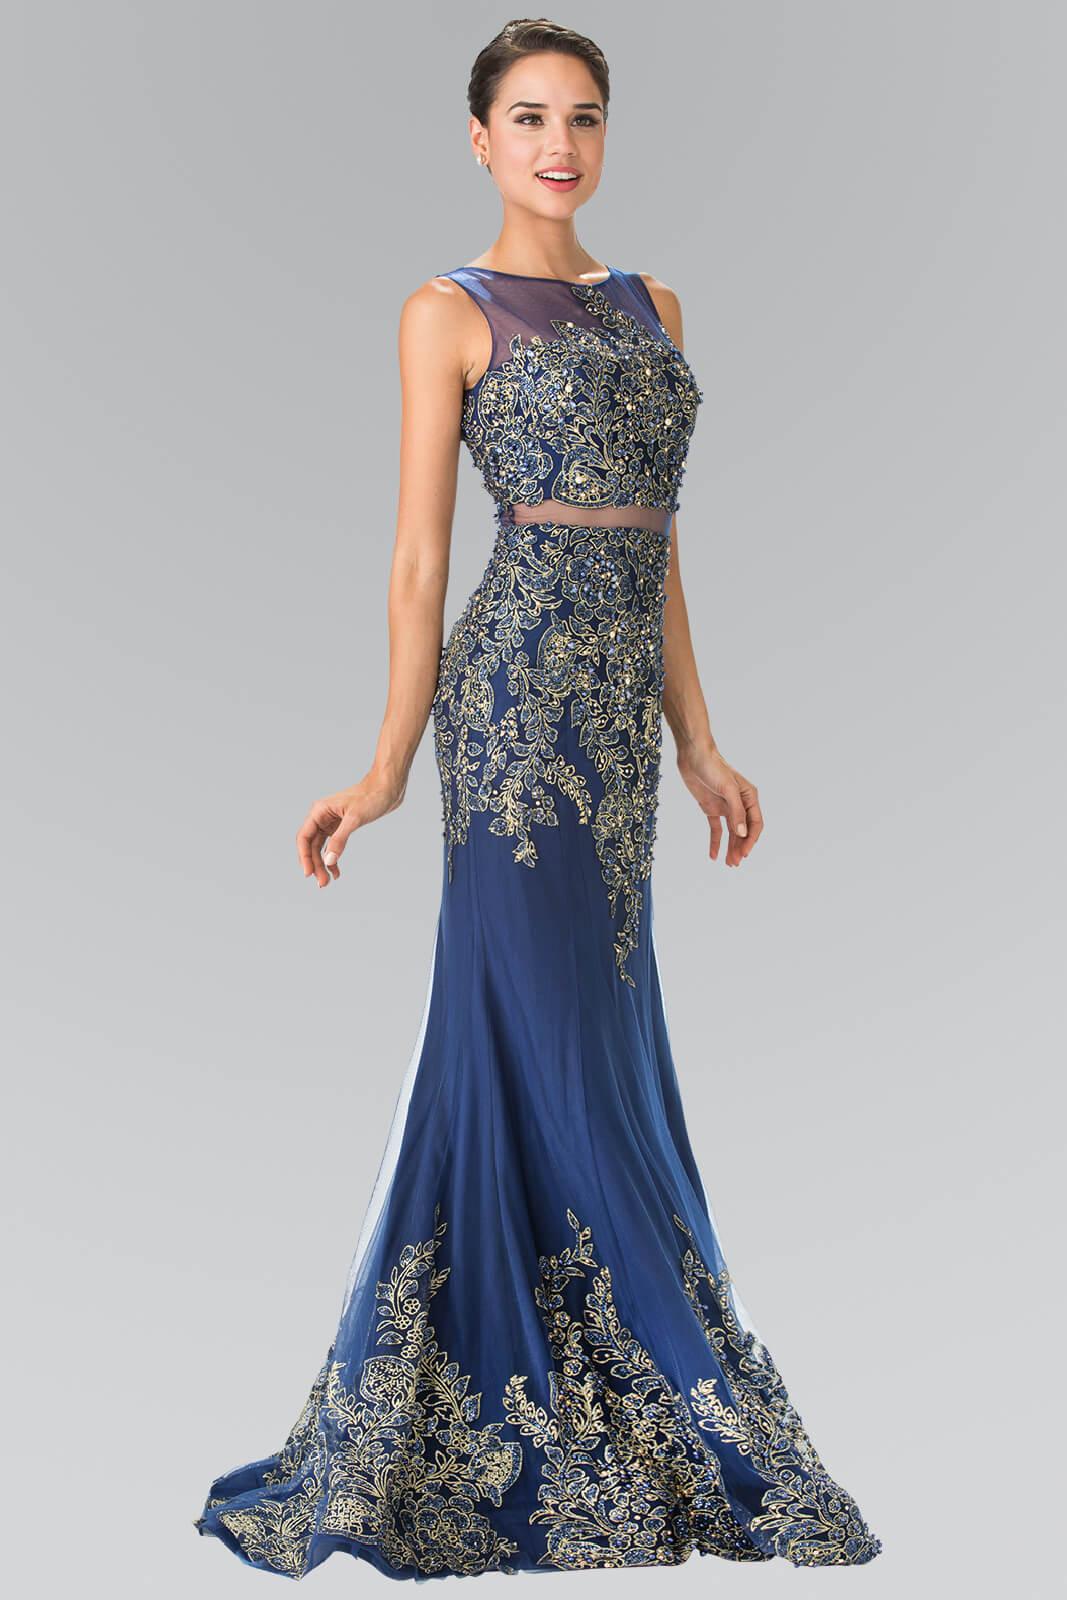 Prom Long Formal Dress Sleeveless Evening Gown - The Dress Outlet Elizabeth K